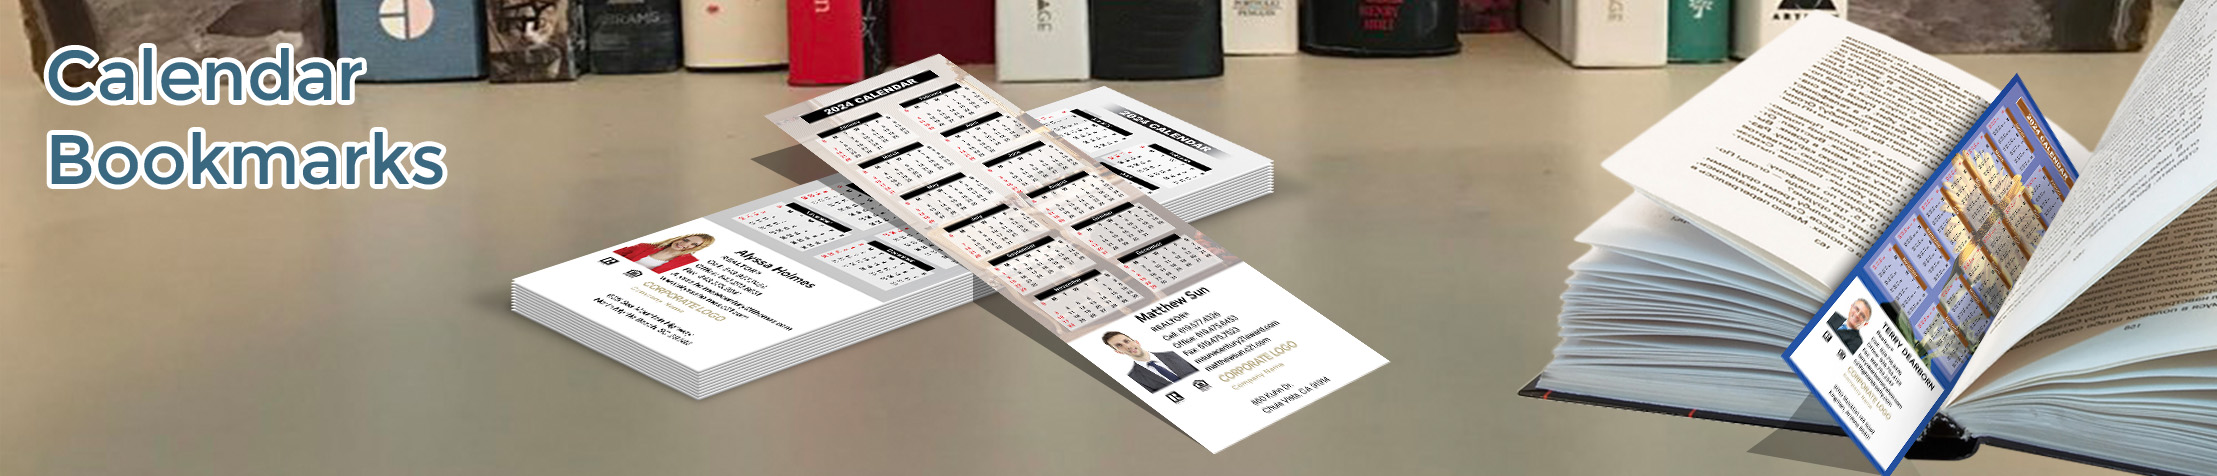 Century 21 Real Estate Calendar Bookmarks - Century 21  2019 calendars printed on book markers | BestPrintBuy.com